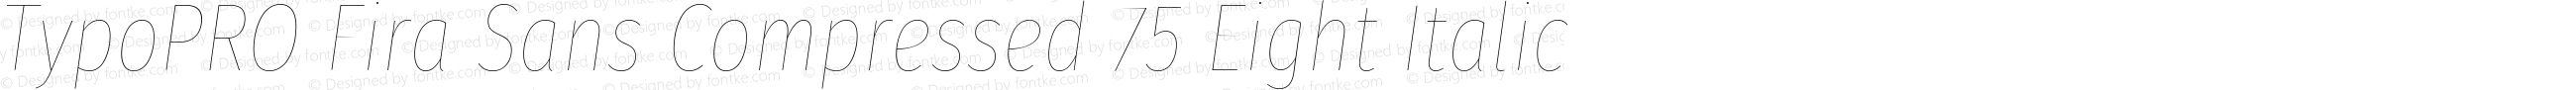 TypoPRO Fira Sans Compressed Eight Italic